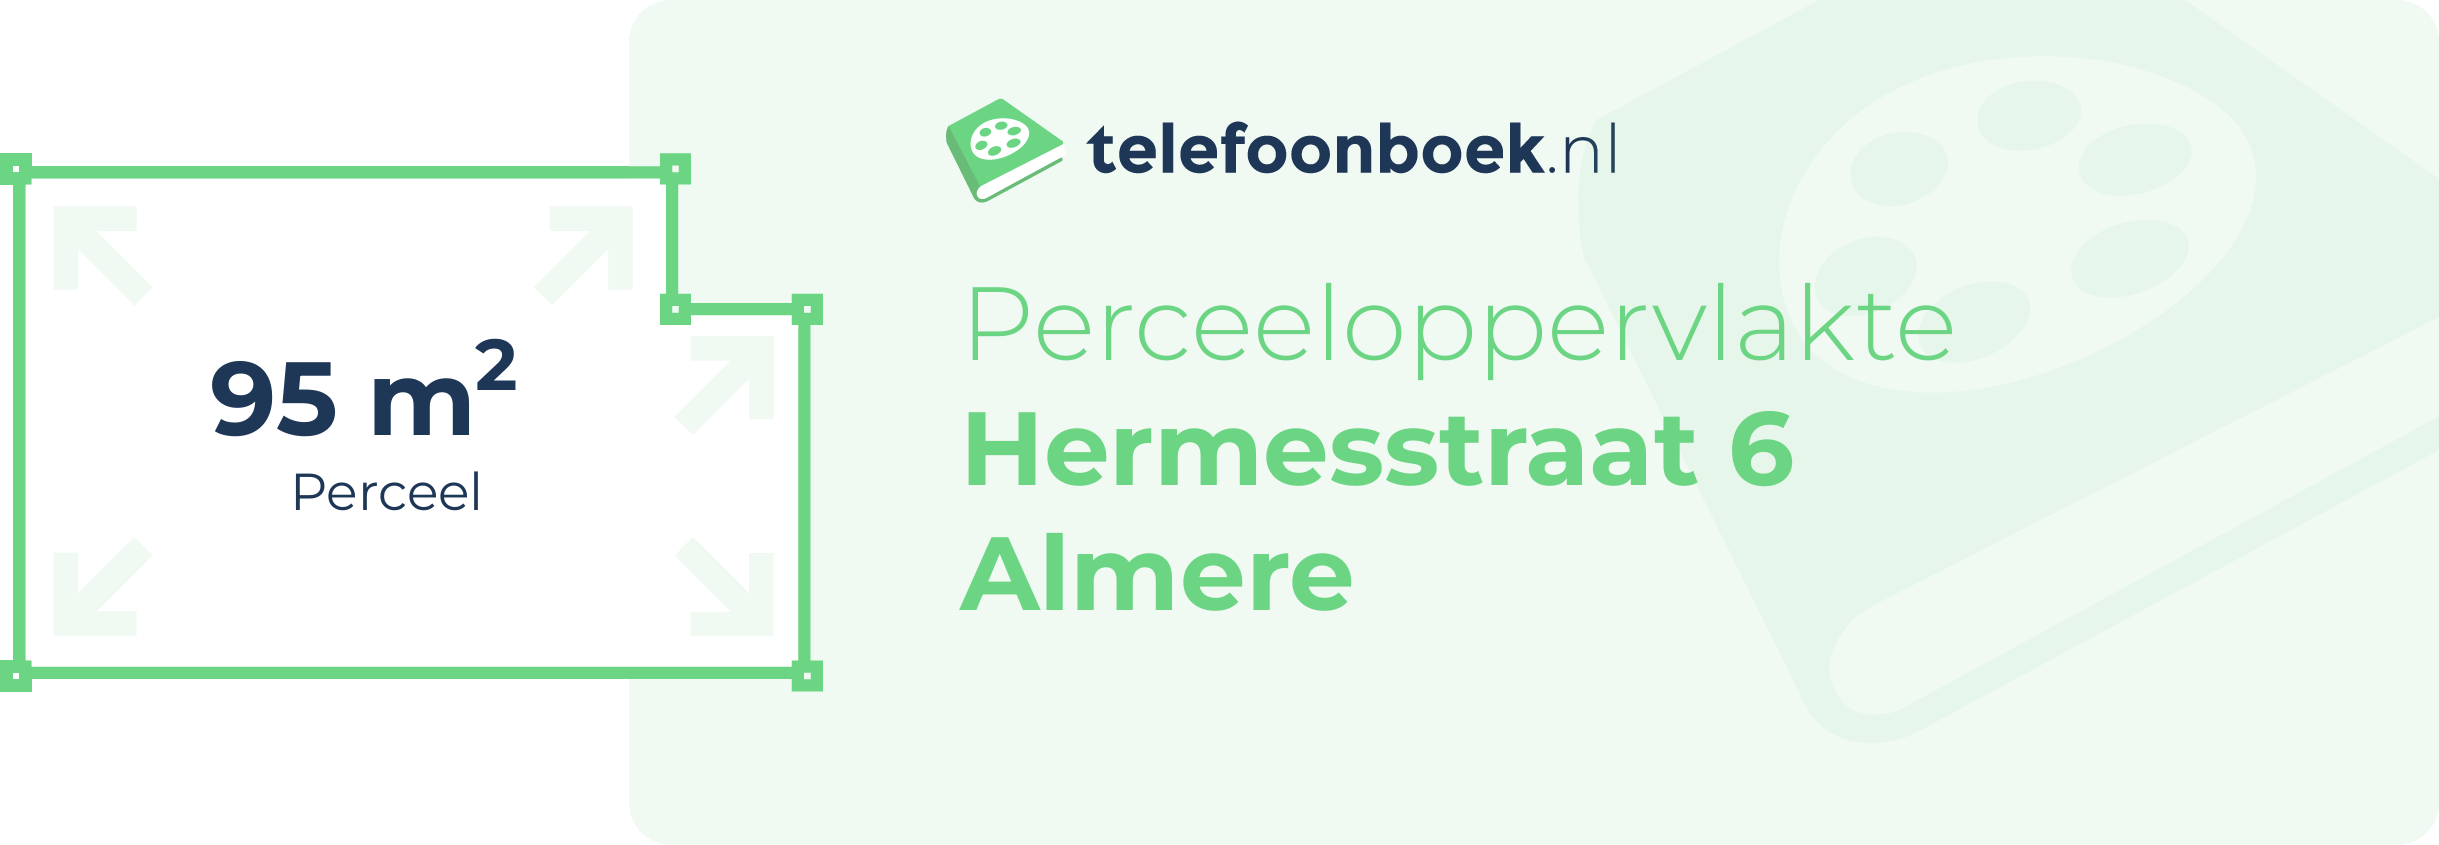 Perceeloppervlakte Hermesstraat 6 Almere